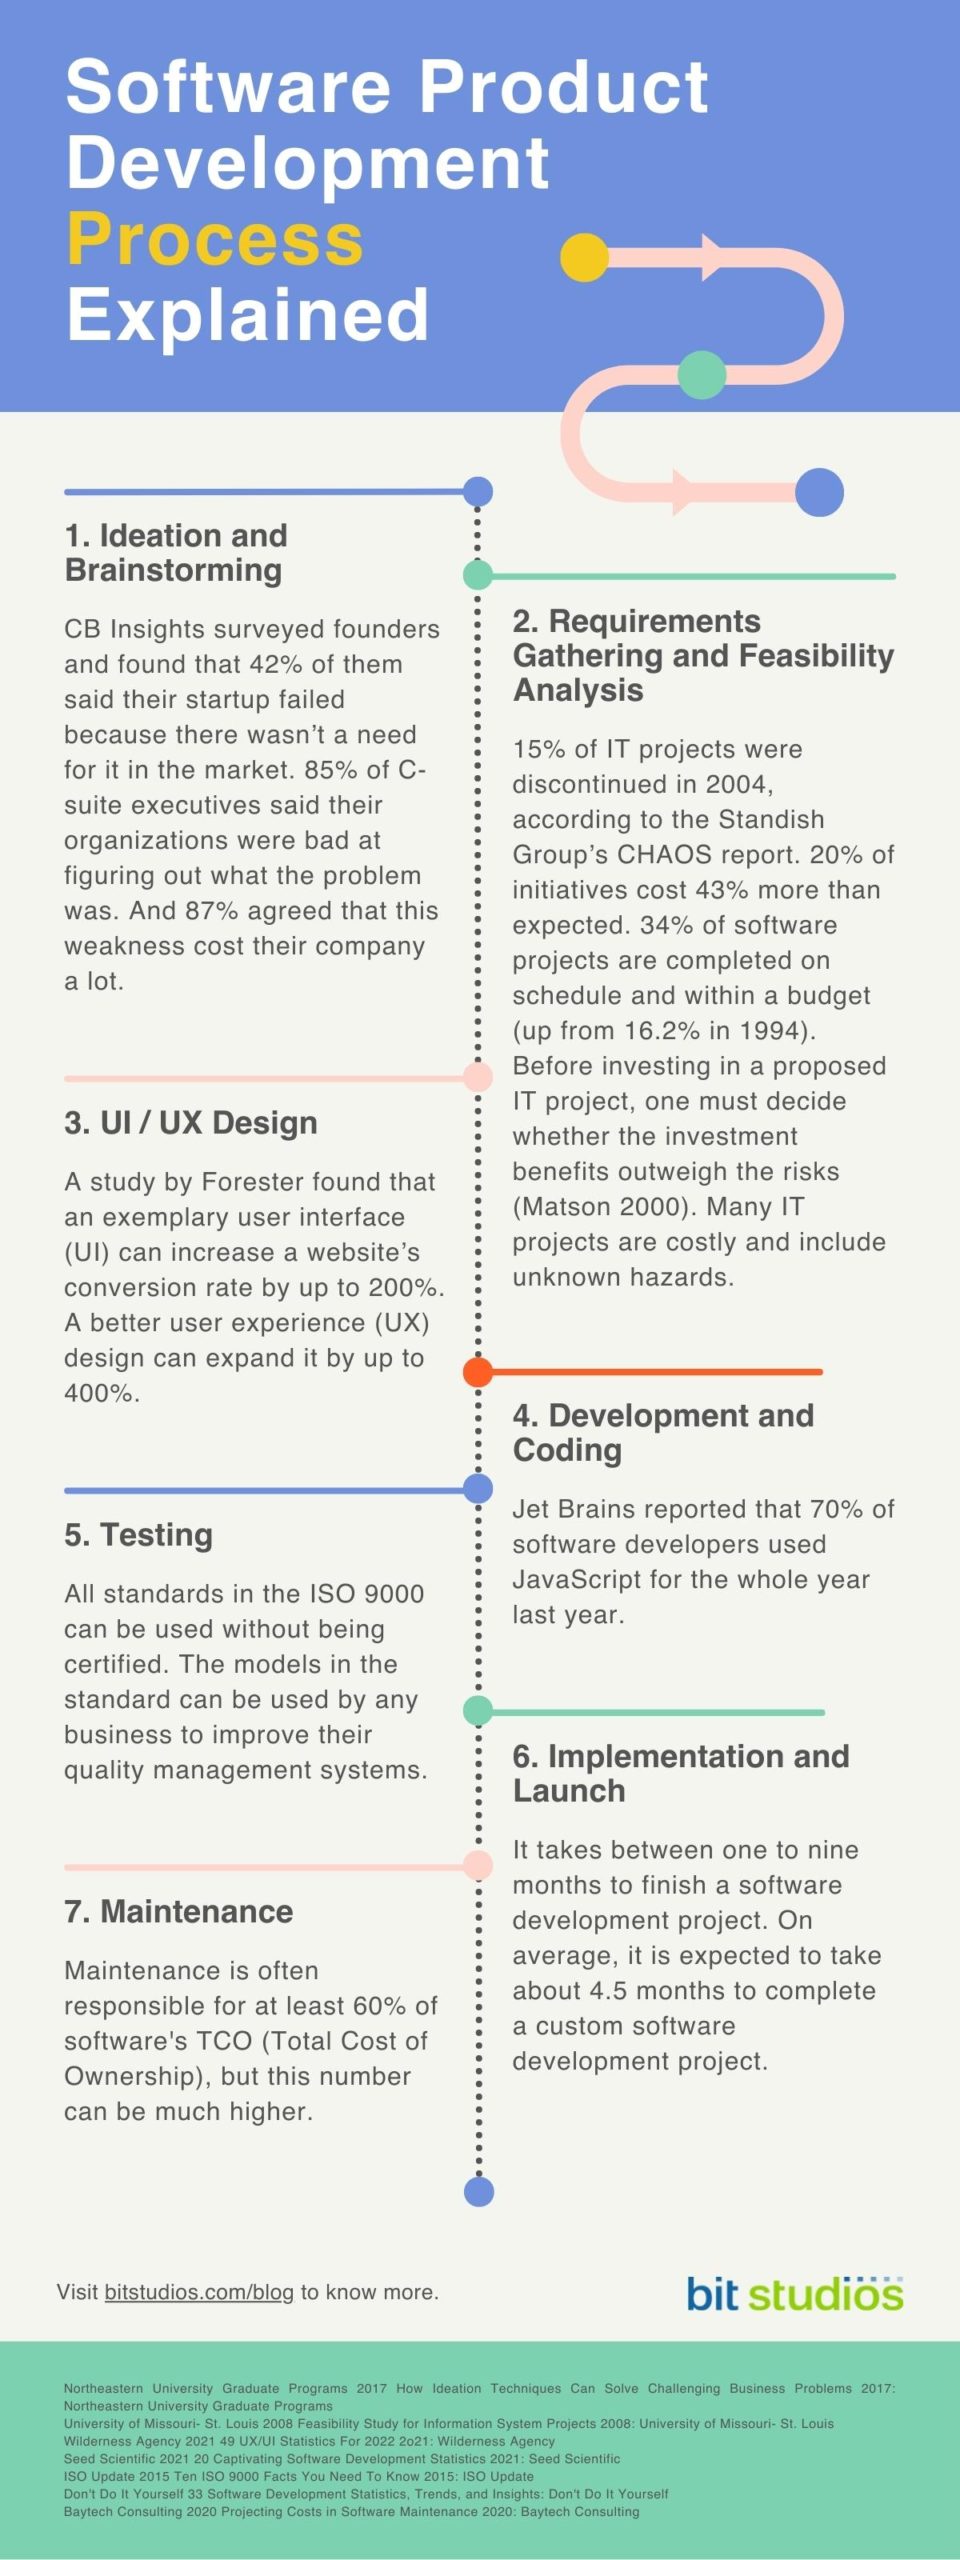 Software Product Development Steps